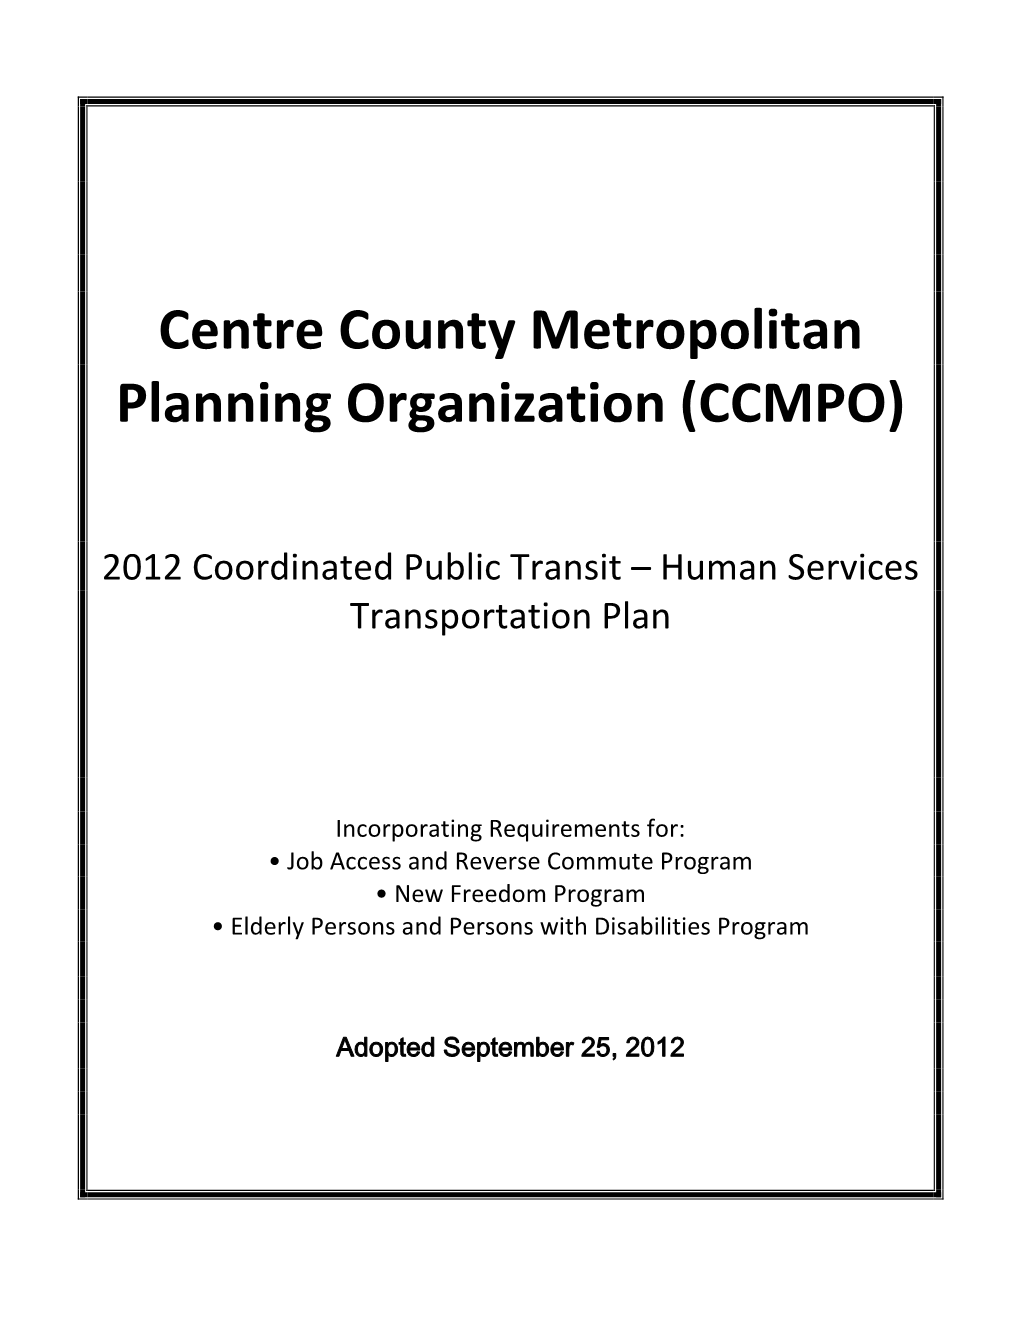 Centre County Metropolitan Planning Organization (CCMPO)